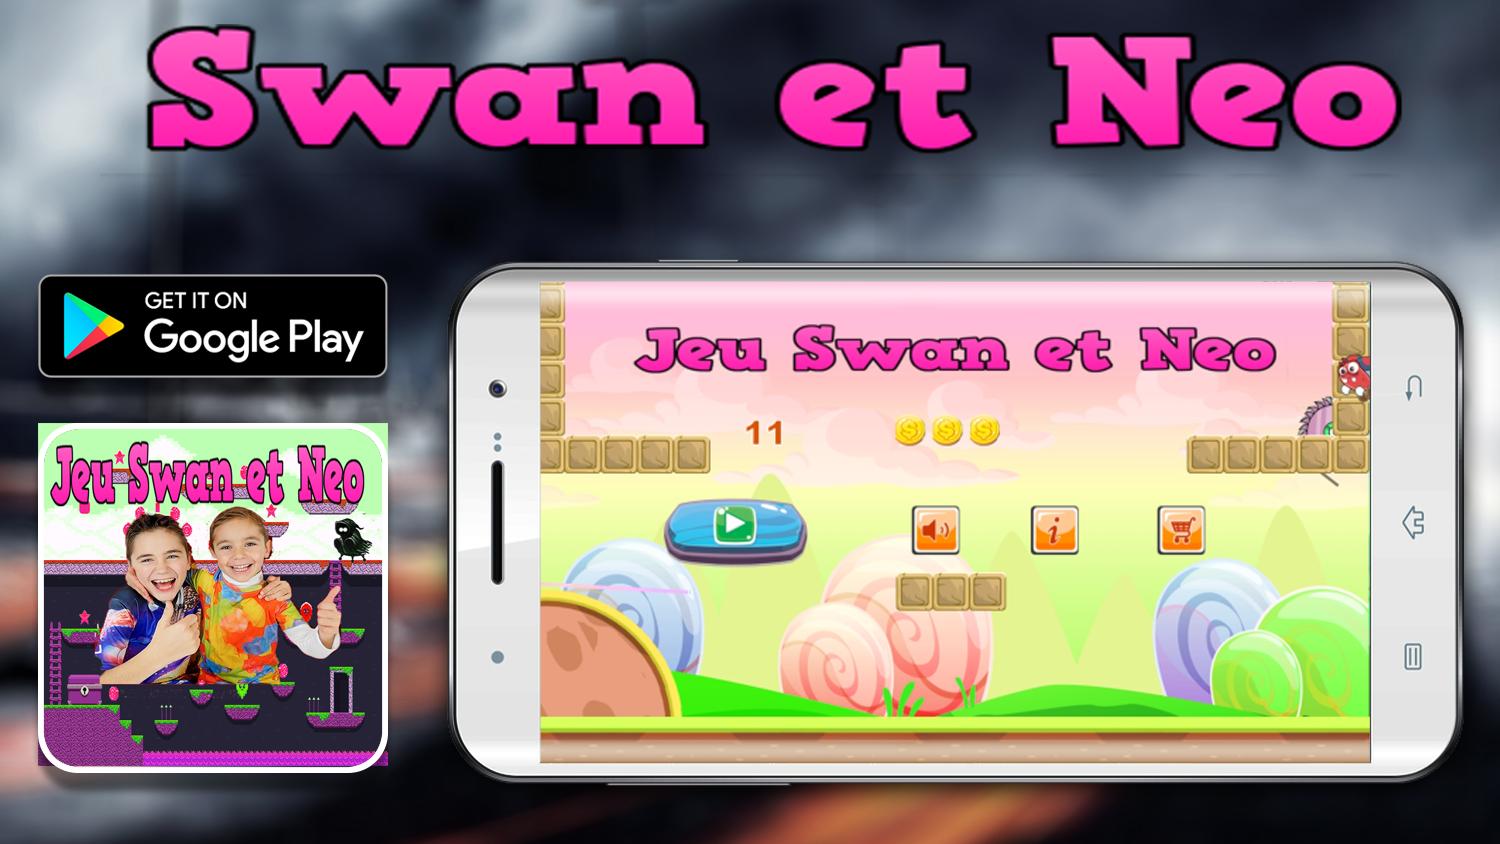 Swan game. Neo et9